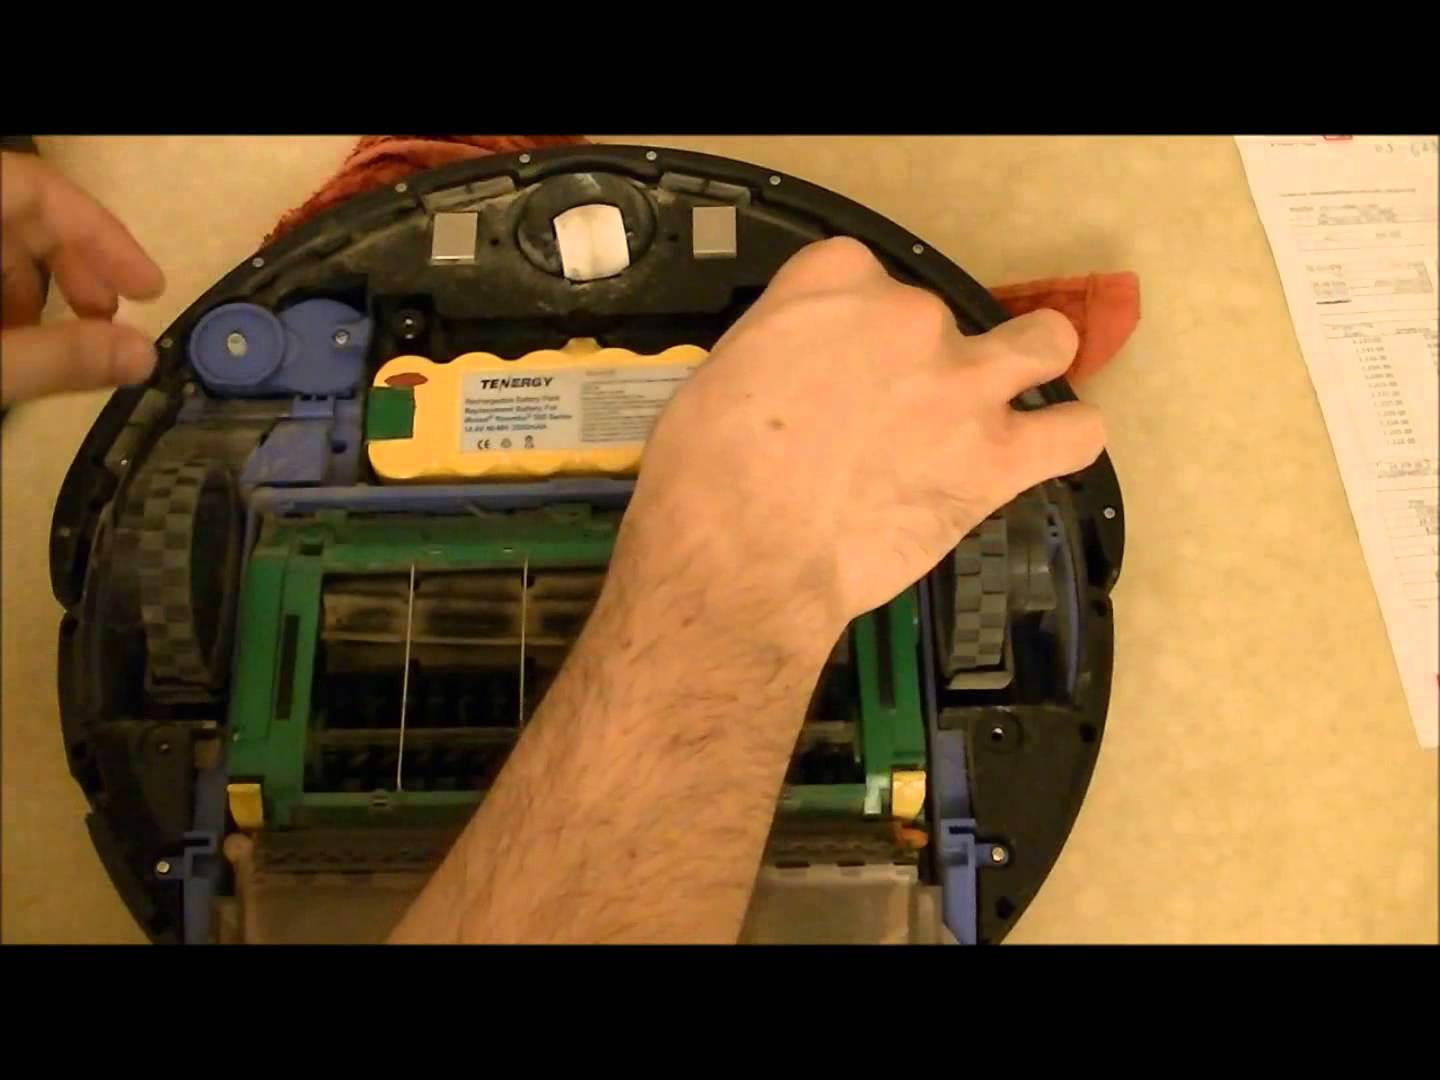 Reparar Batería Roomba 